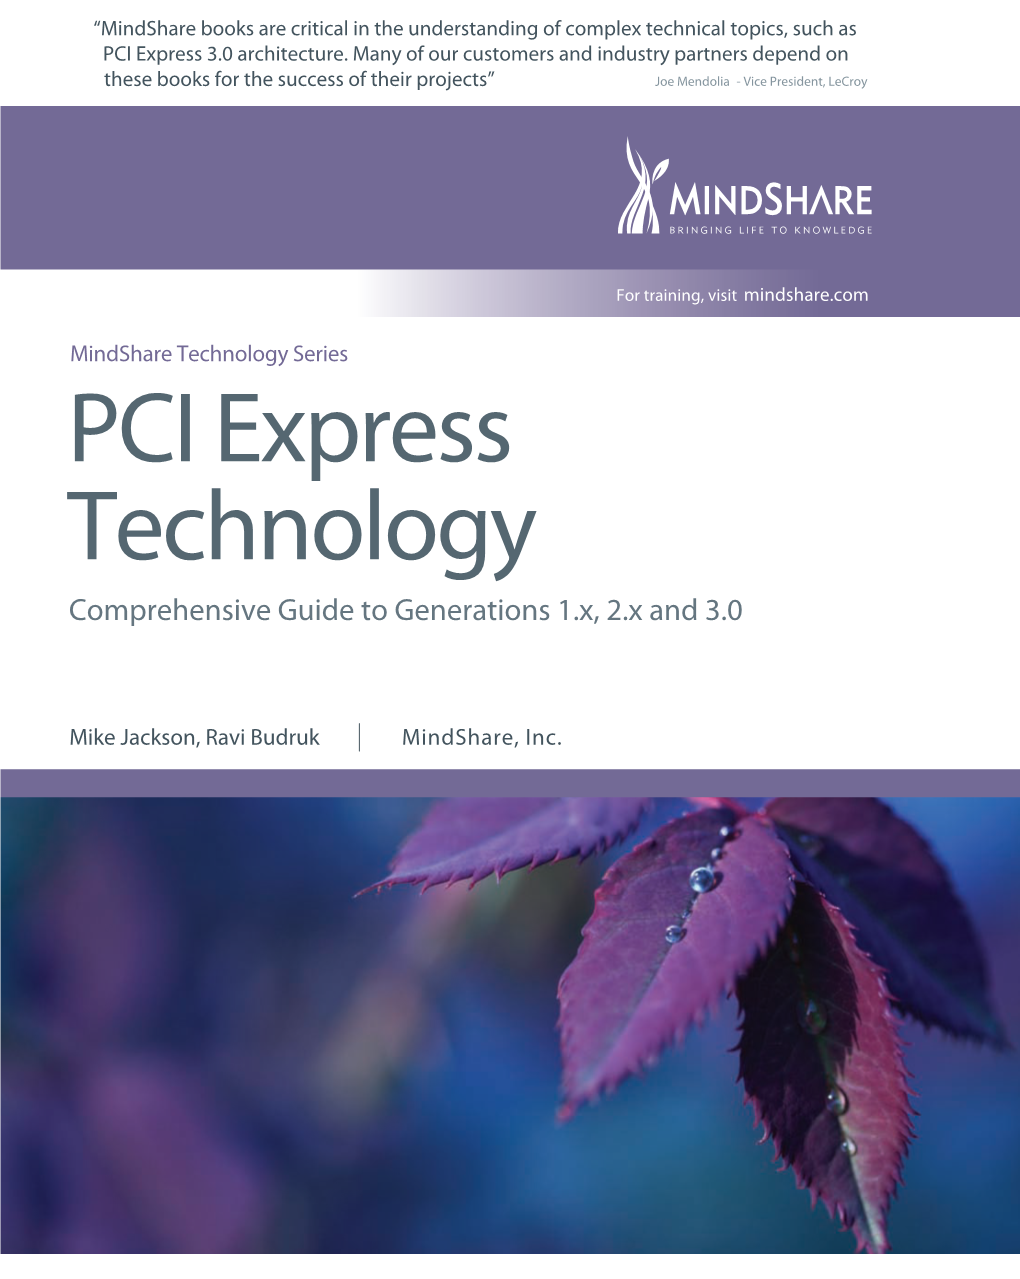 PCI Express 3.0 Architecture